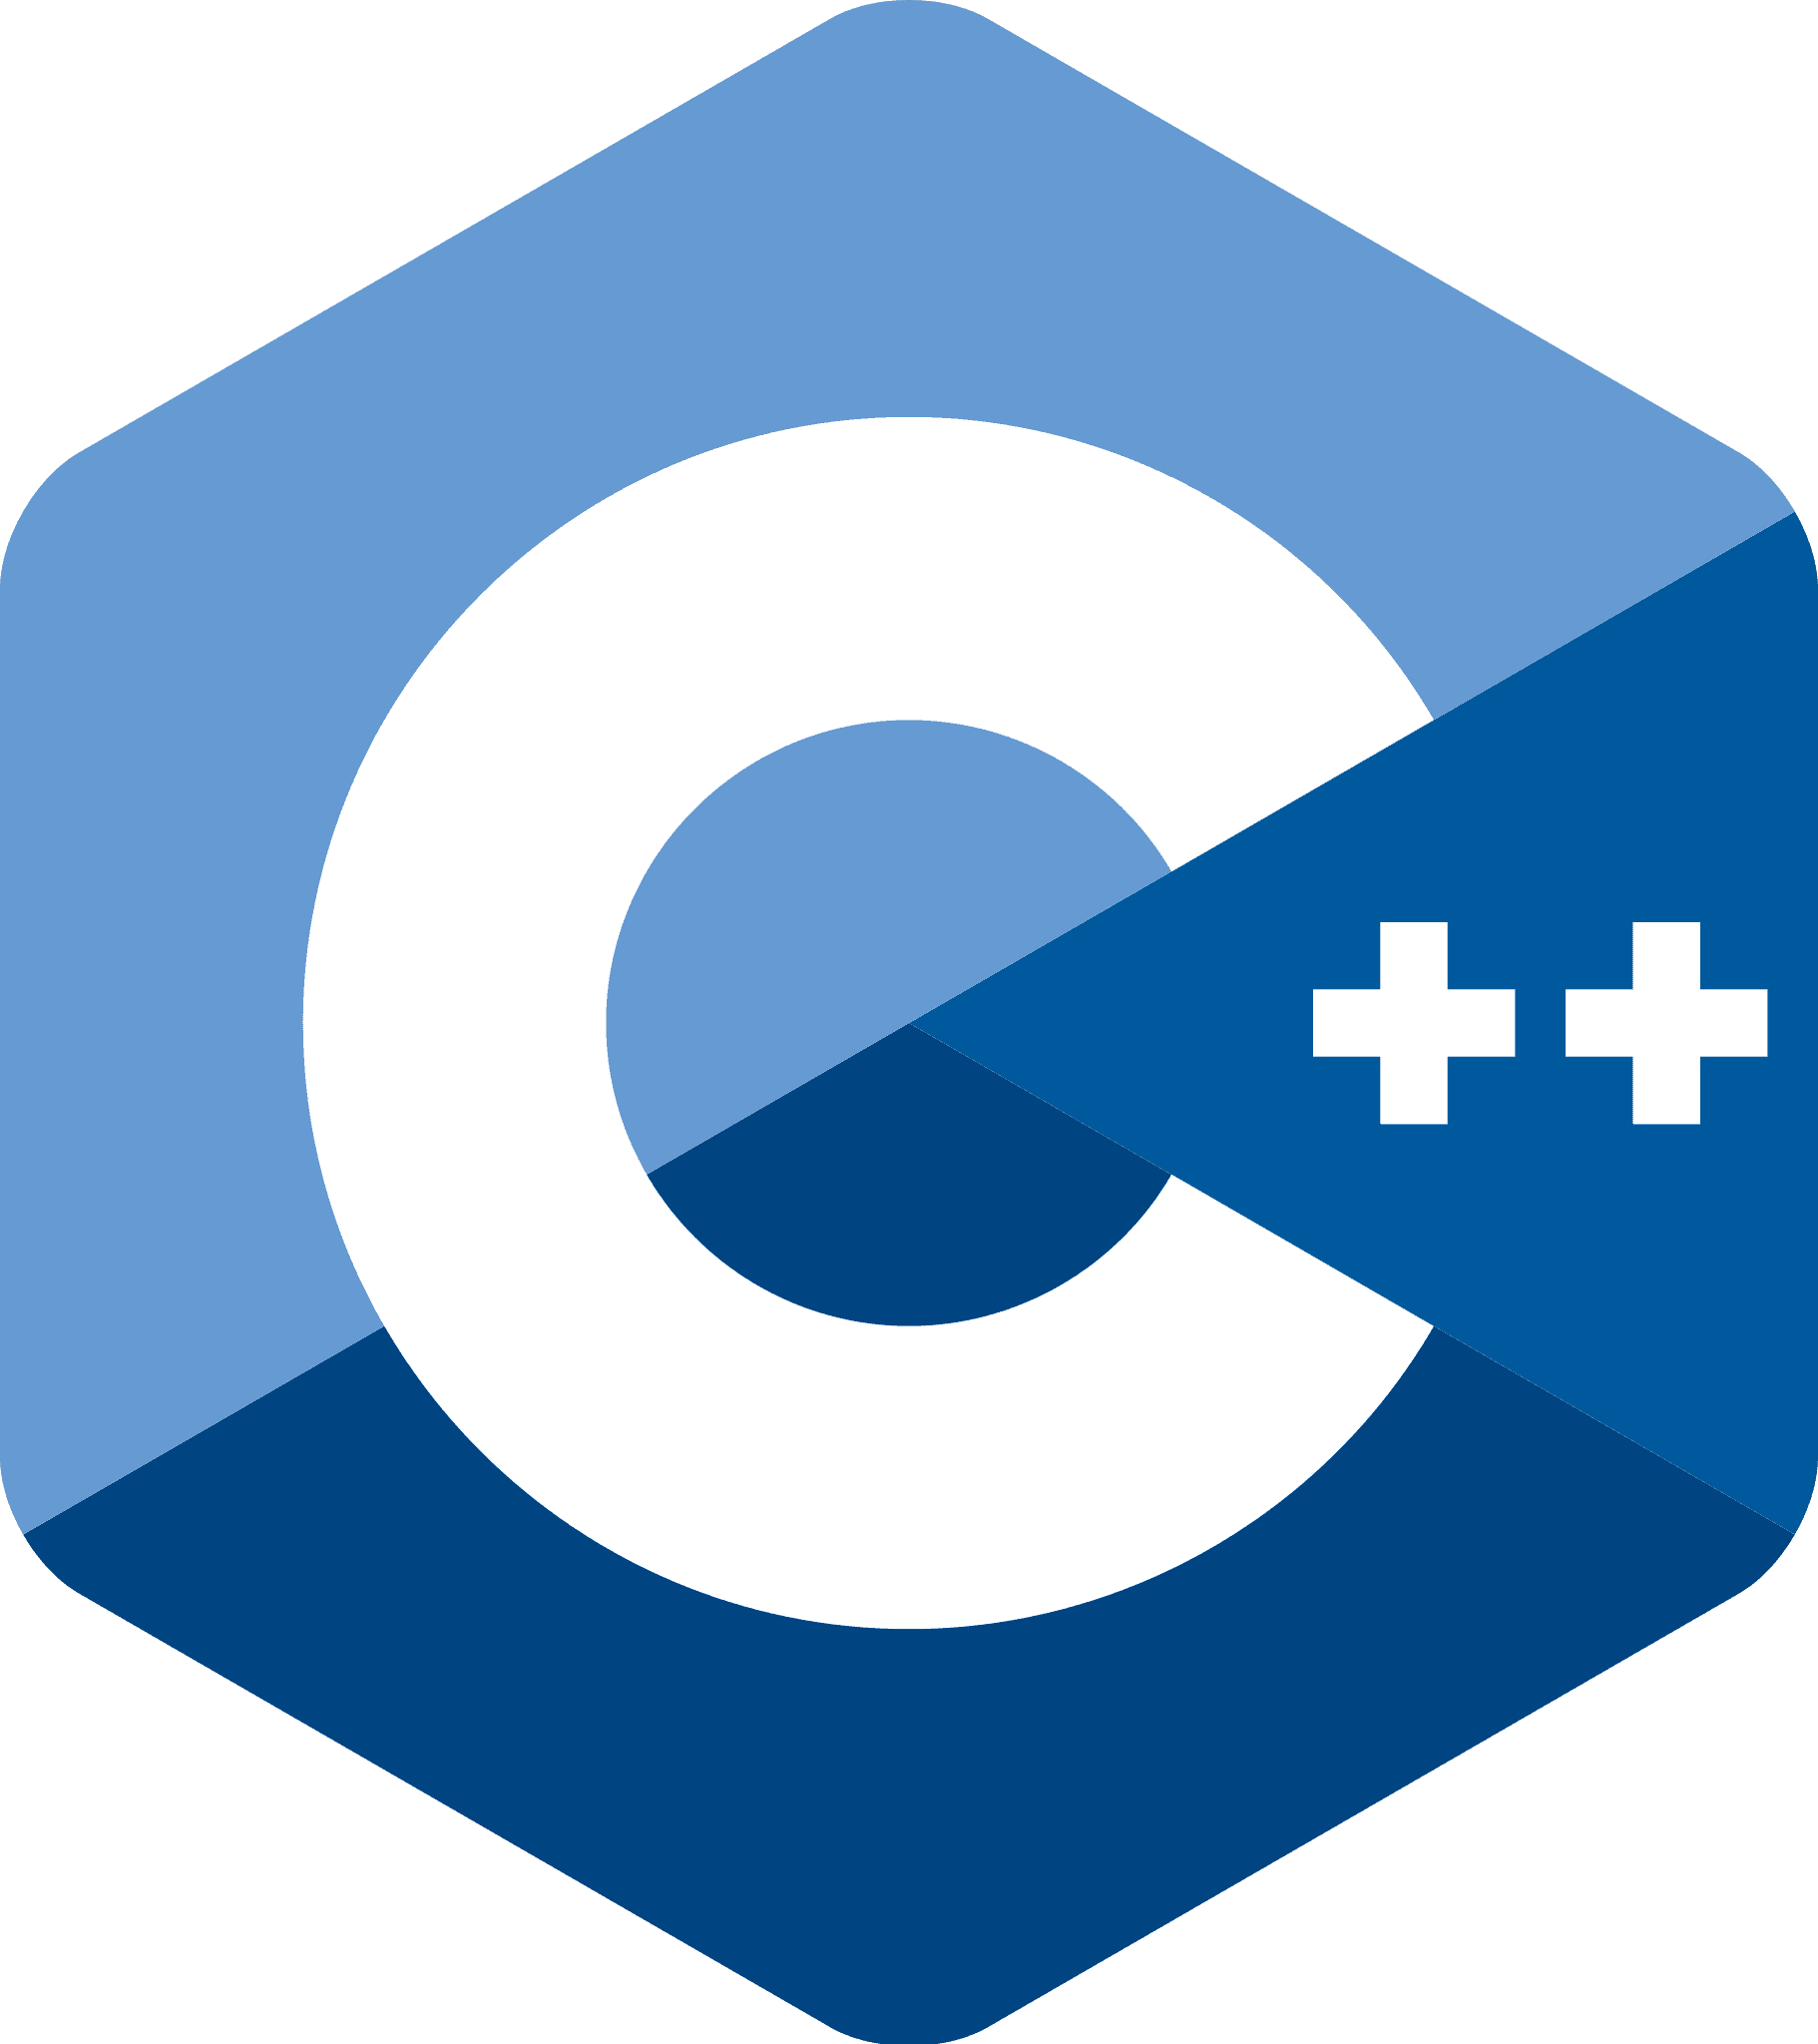 C++ image